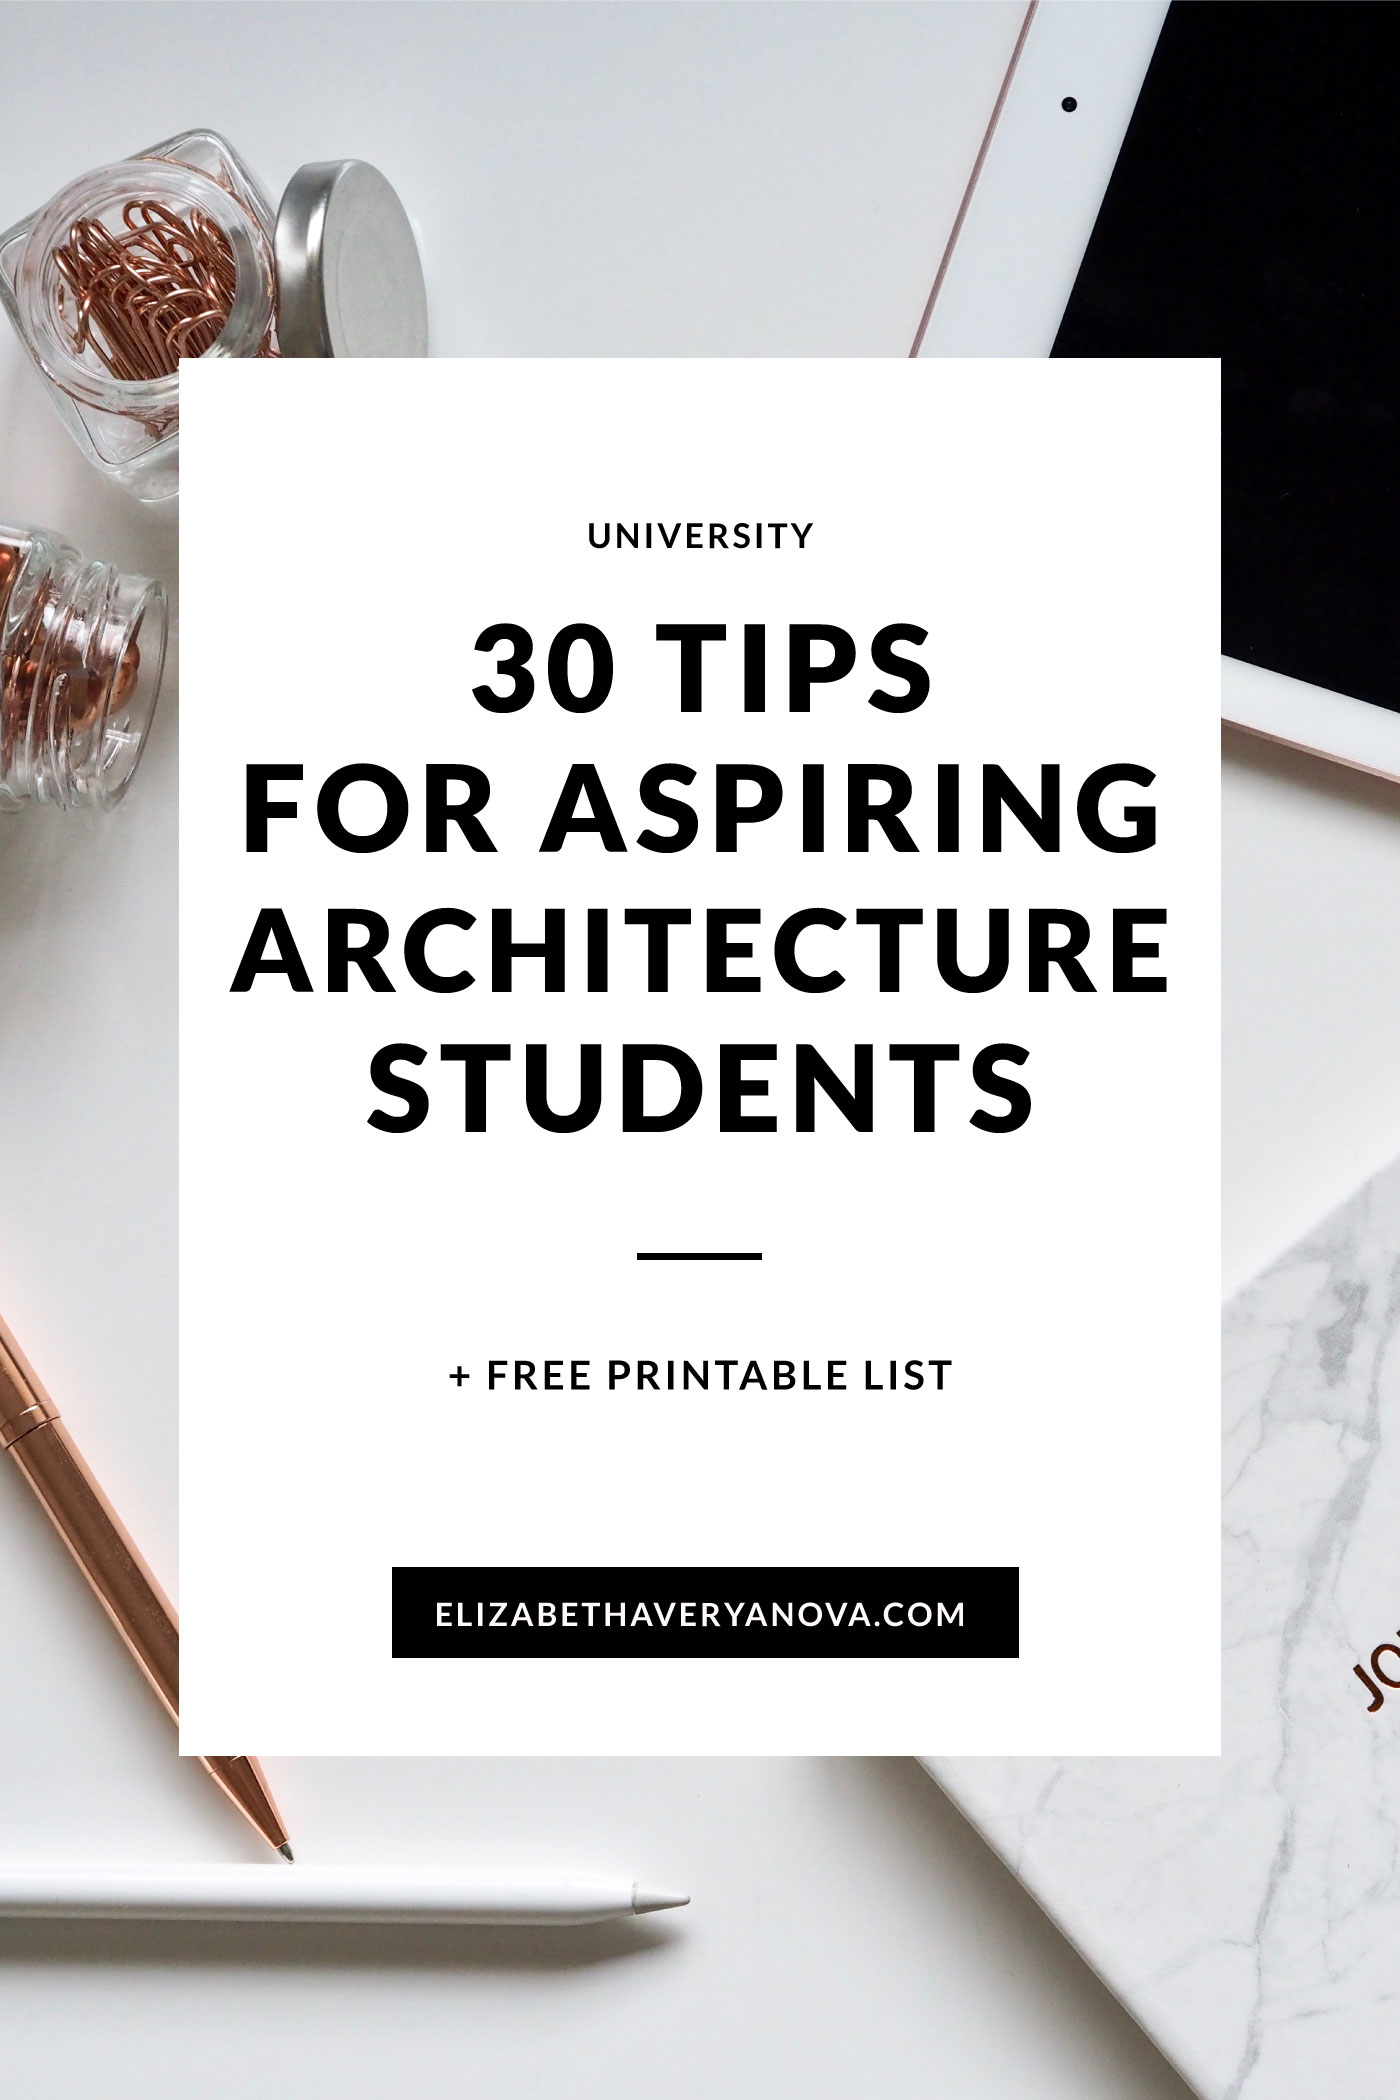 Tips-for-Aspiring-Architecture-Students-Elizabeth-Averyanova-Blog